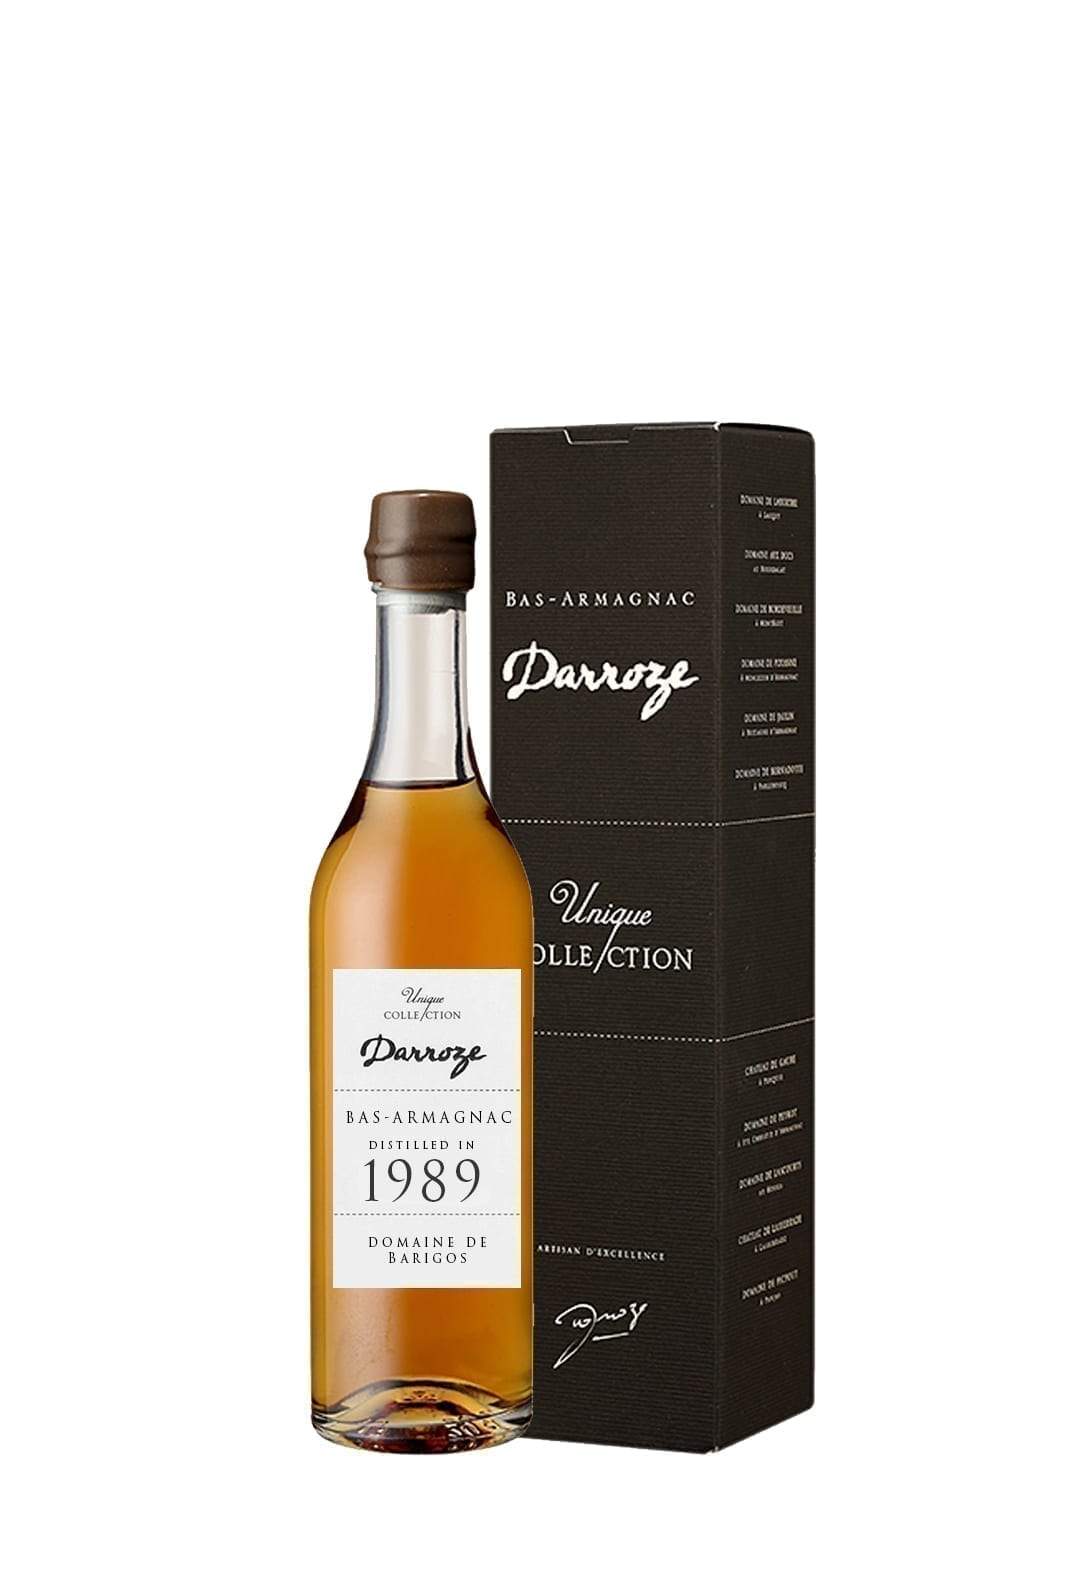 Darroze 1989 Barigos Bas Armagnac 45.8% 200ml | Brandy | Shop online at Spirits of France